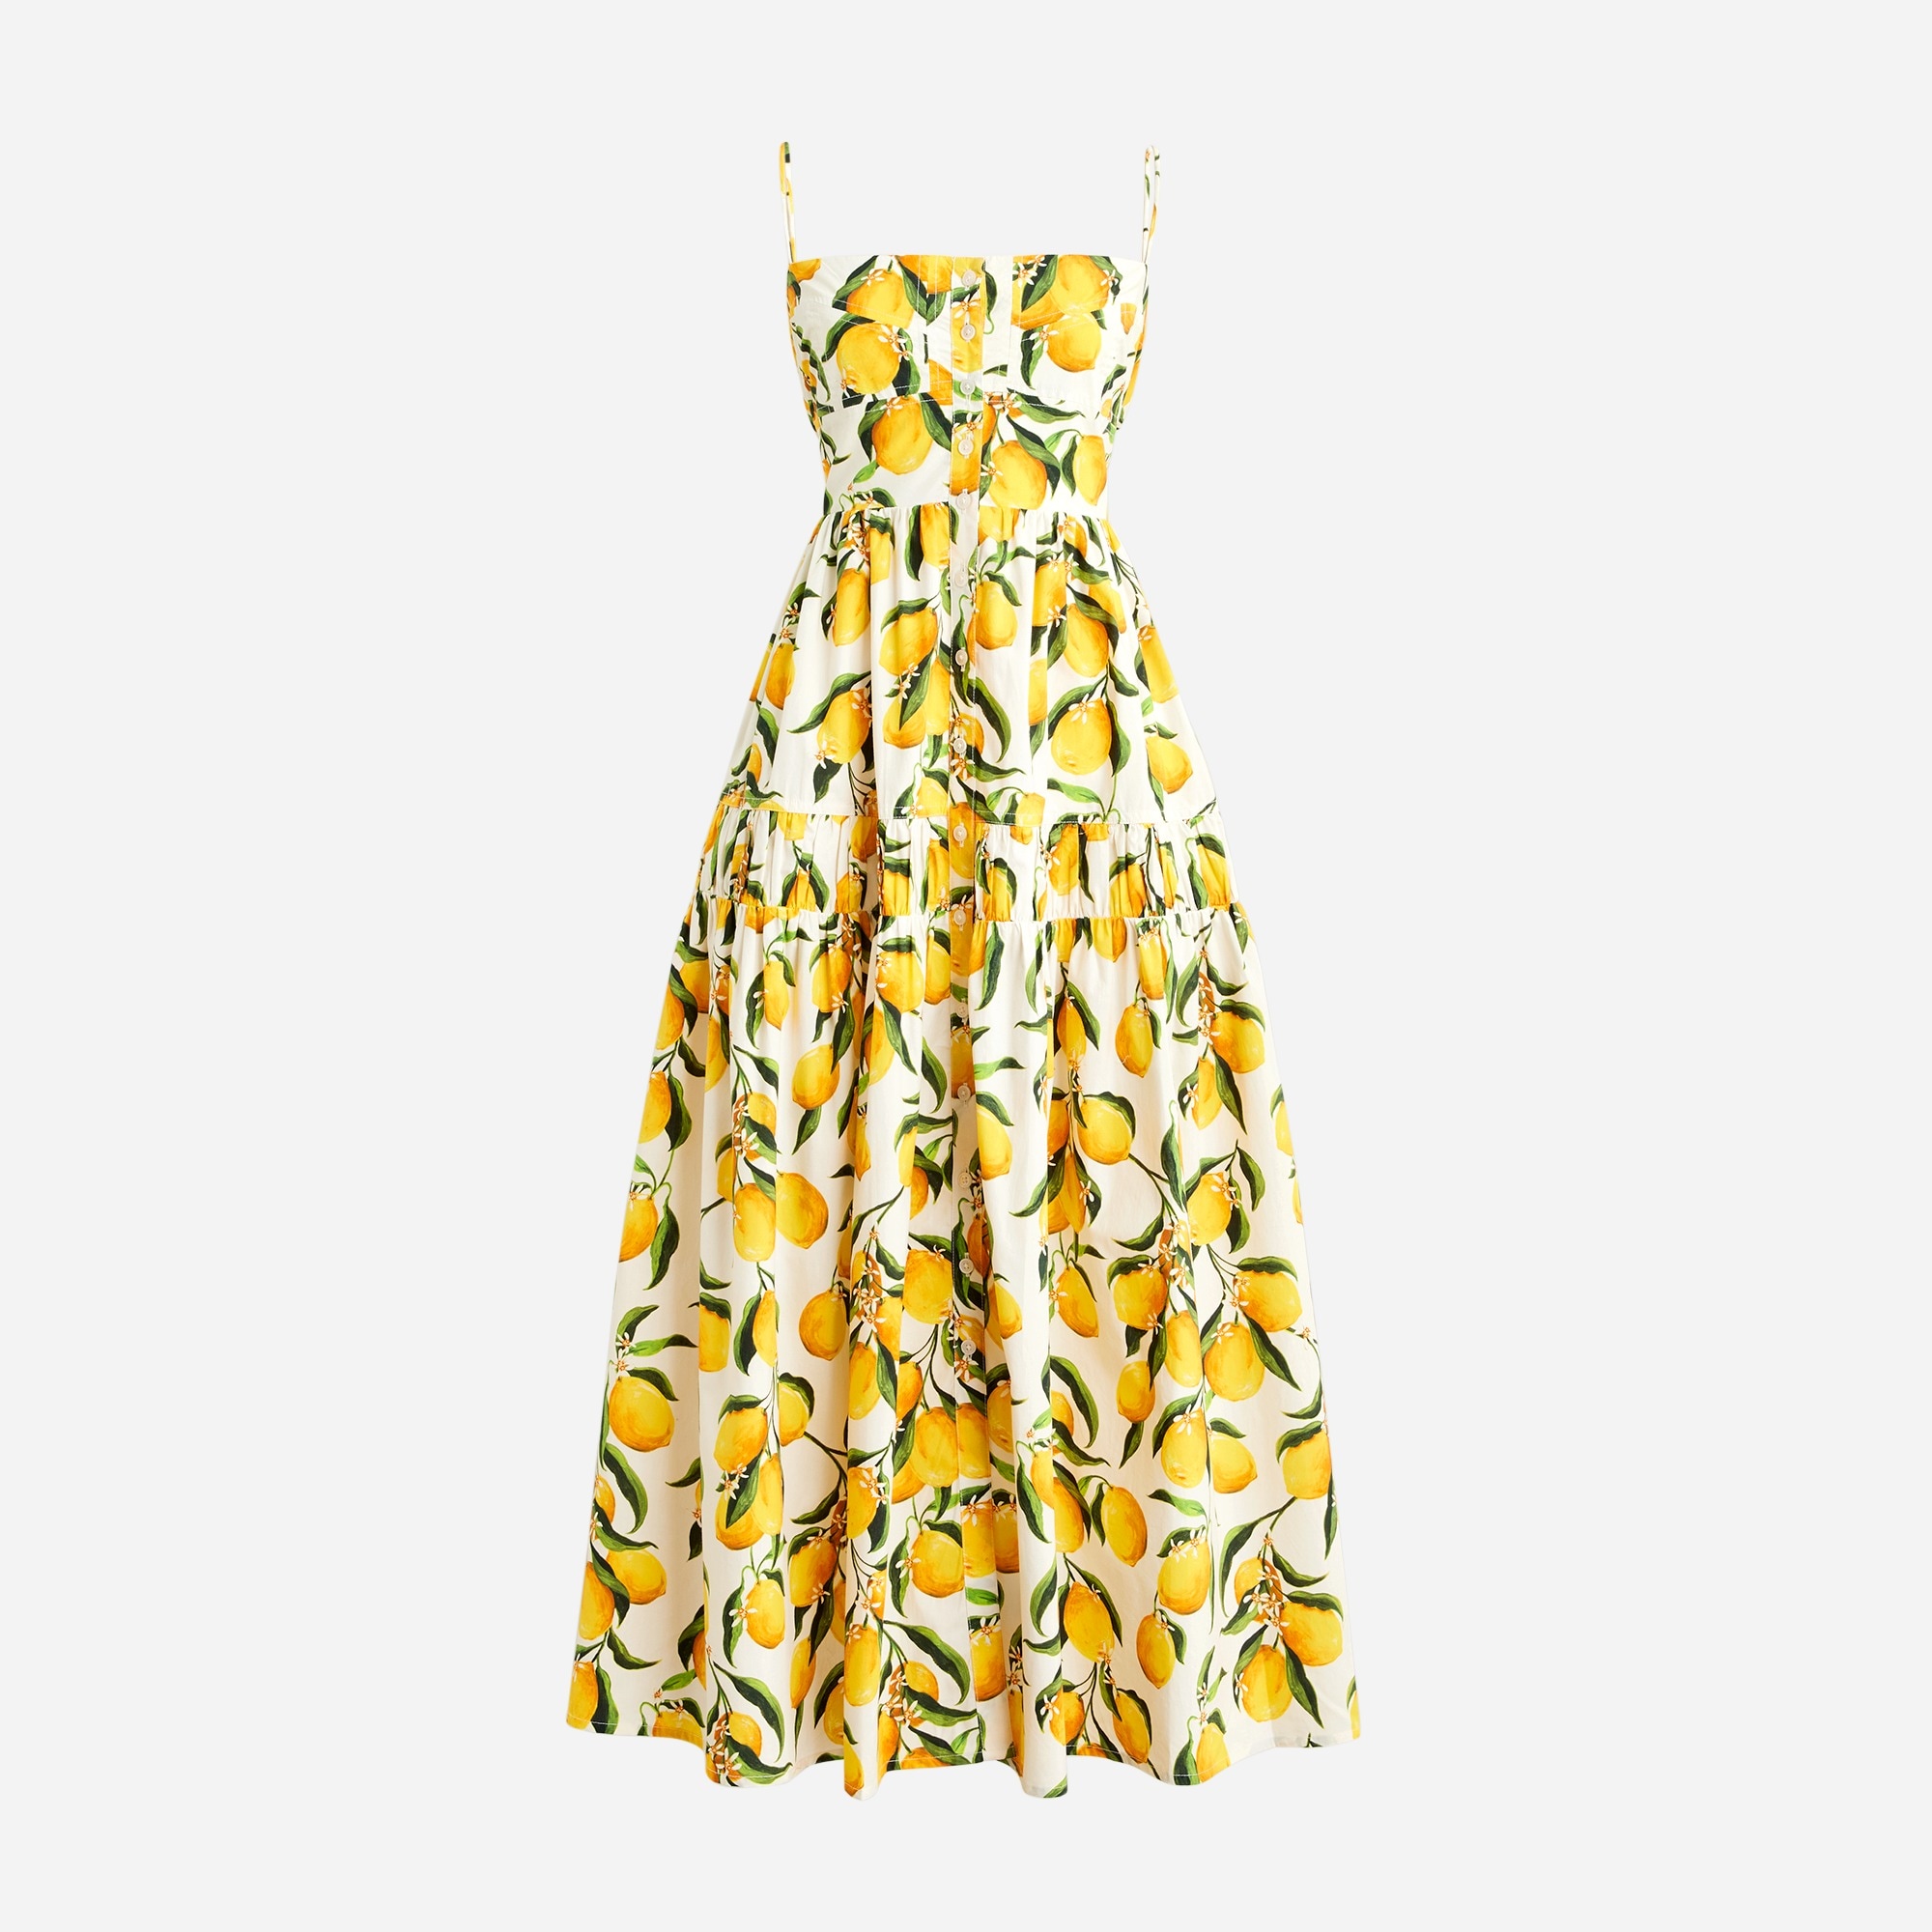  Button-front A-line dress in lemon leaf